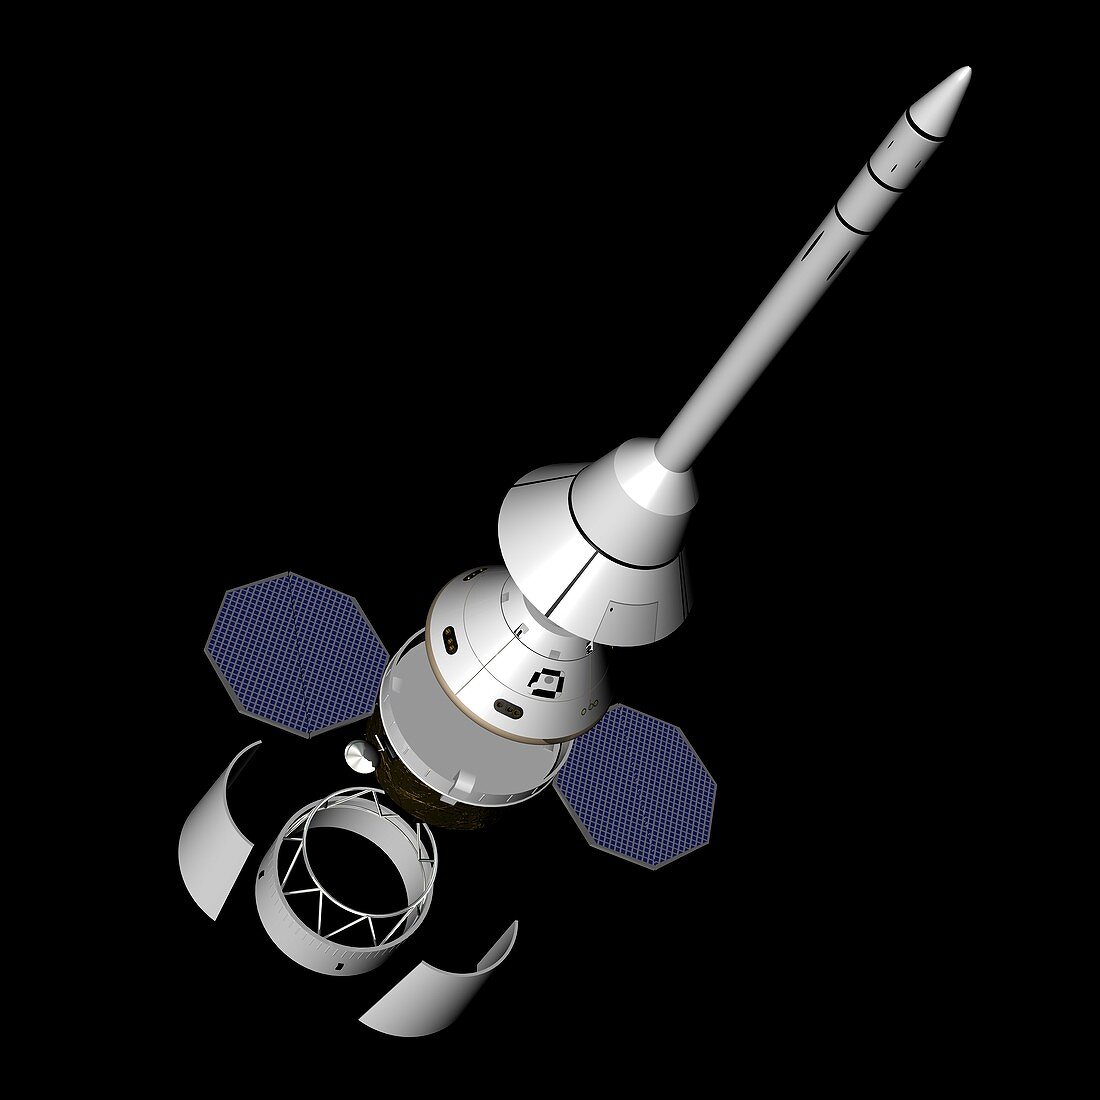 Orion crew exploration vehicle,artwork